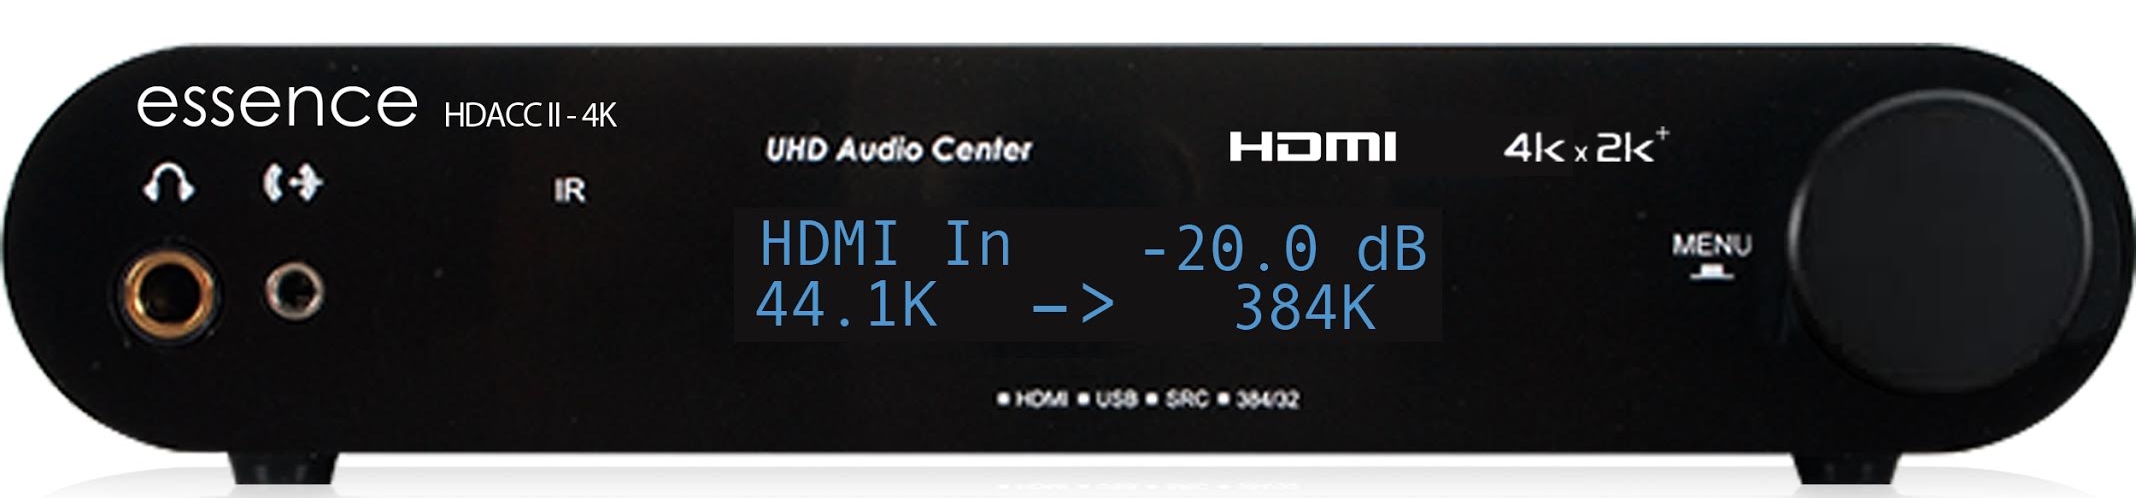 4K Media Player with Remote Control, Full HD HDMI Digital Media Player, 5GB TV Media Player with HDMI, AV, Optical Fiber Output, for USB Drives Storag - 3